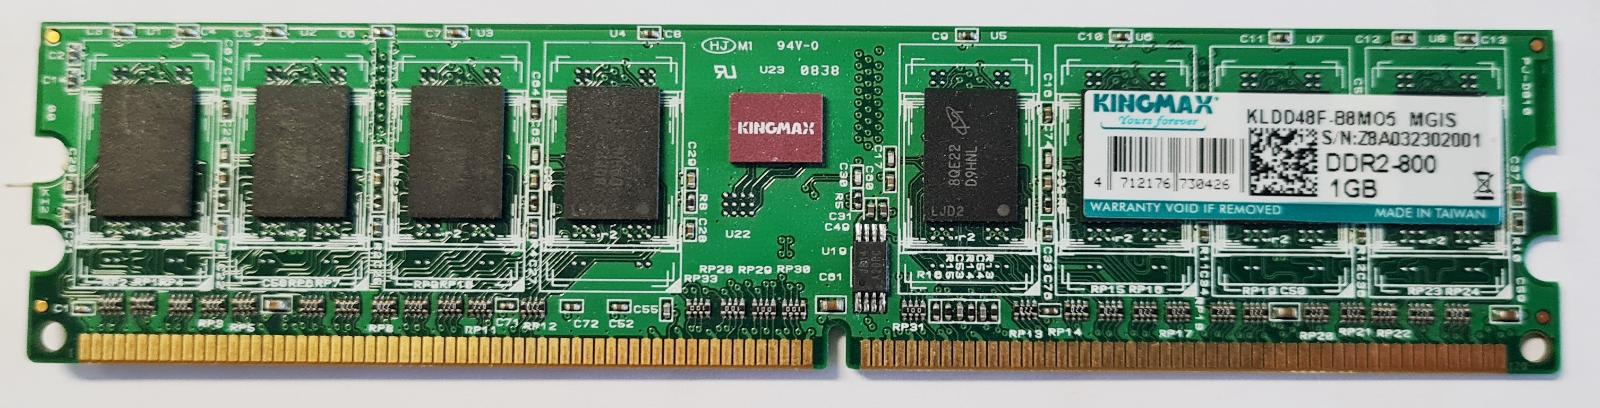 Pamäť RAM do PC Kingmax KLDD48F-B8MO5 1GB 800MHz DDR2 - Počítače a hry